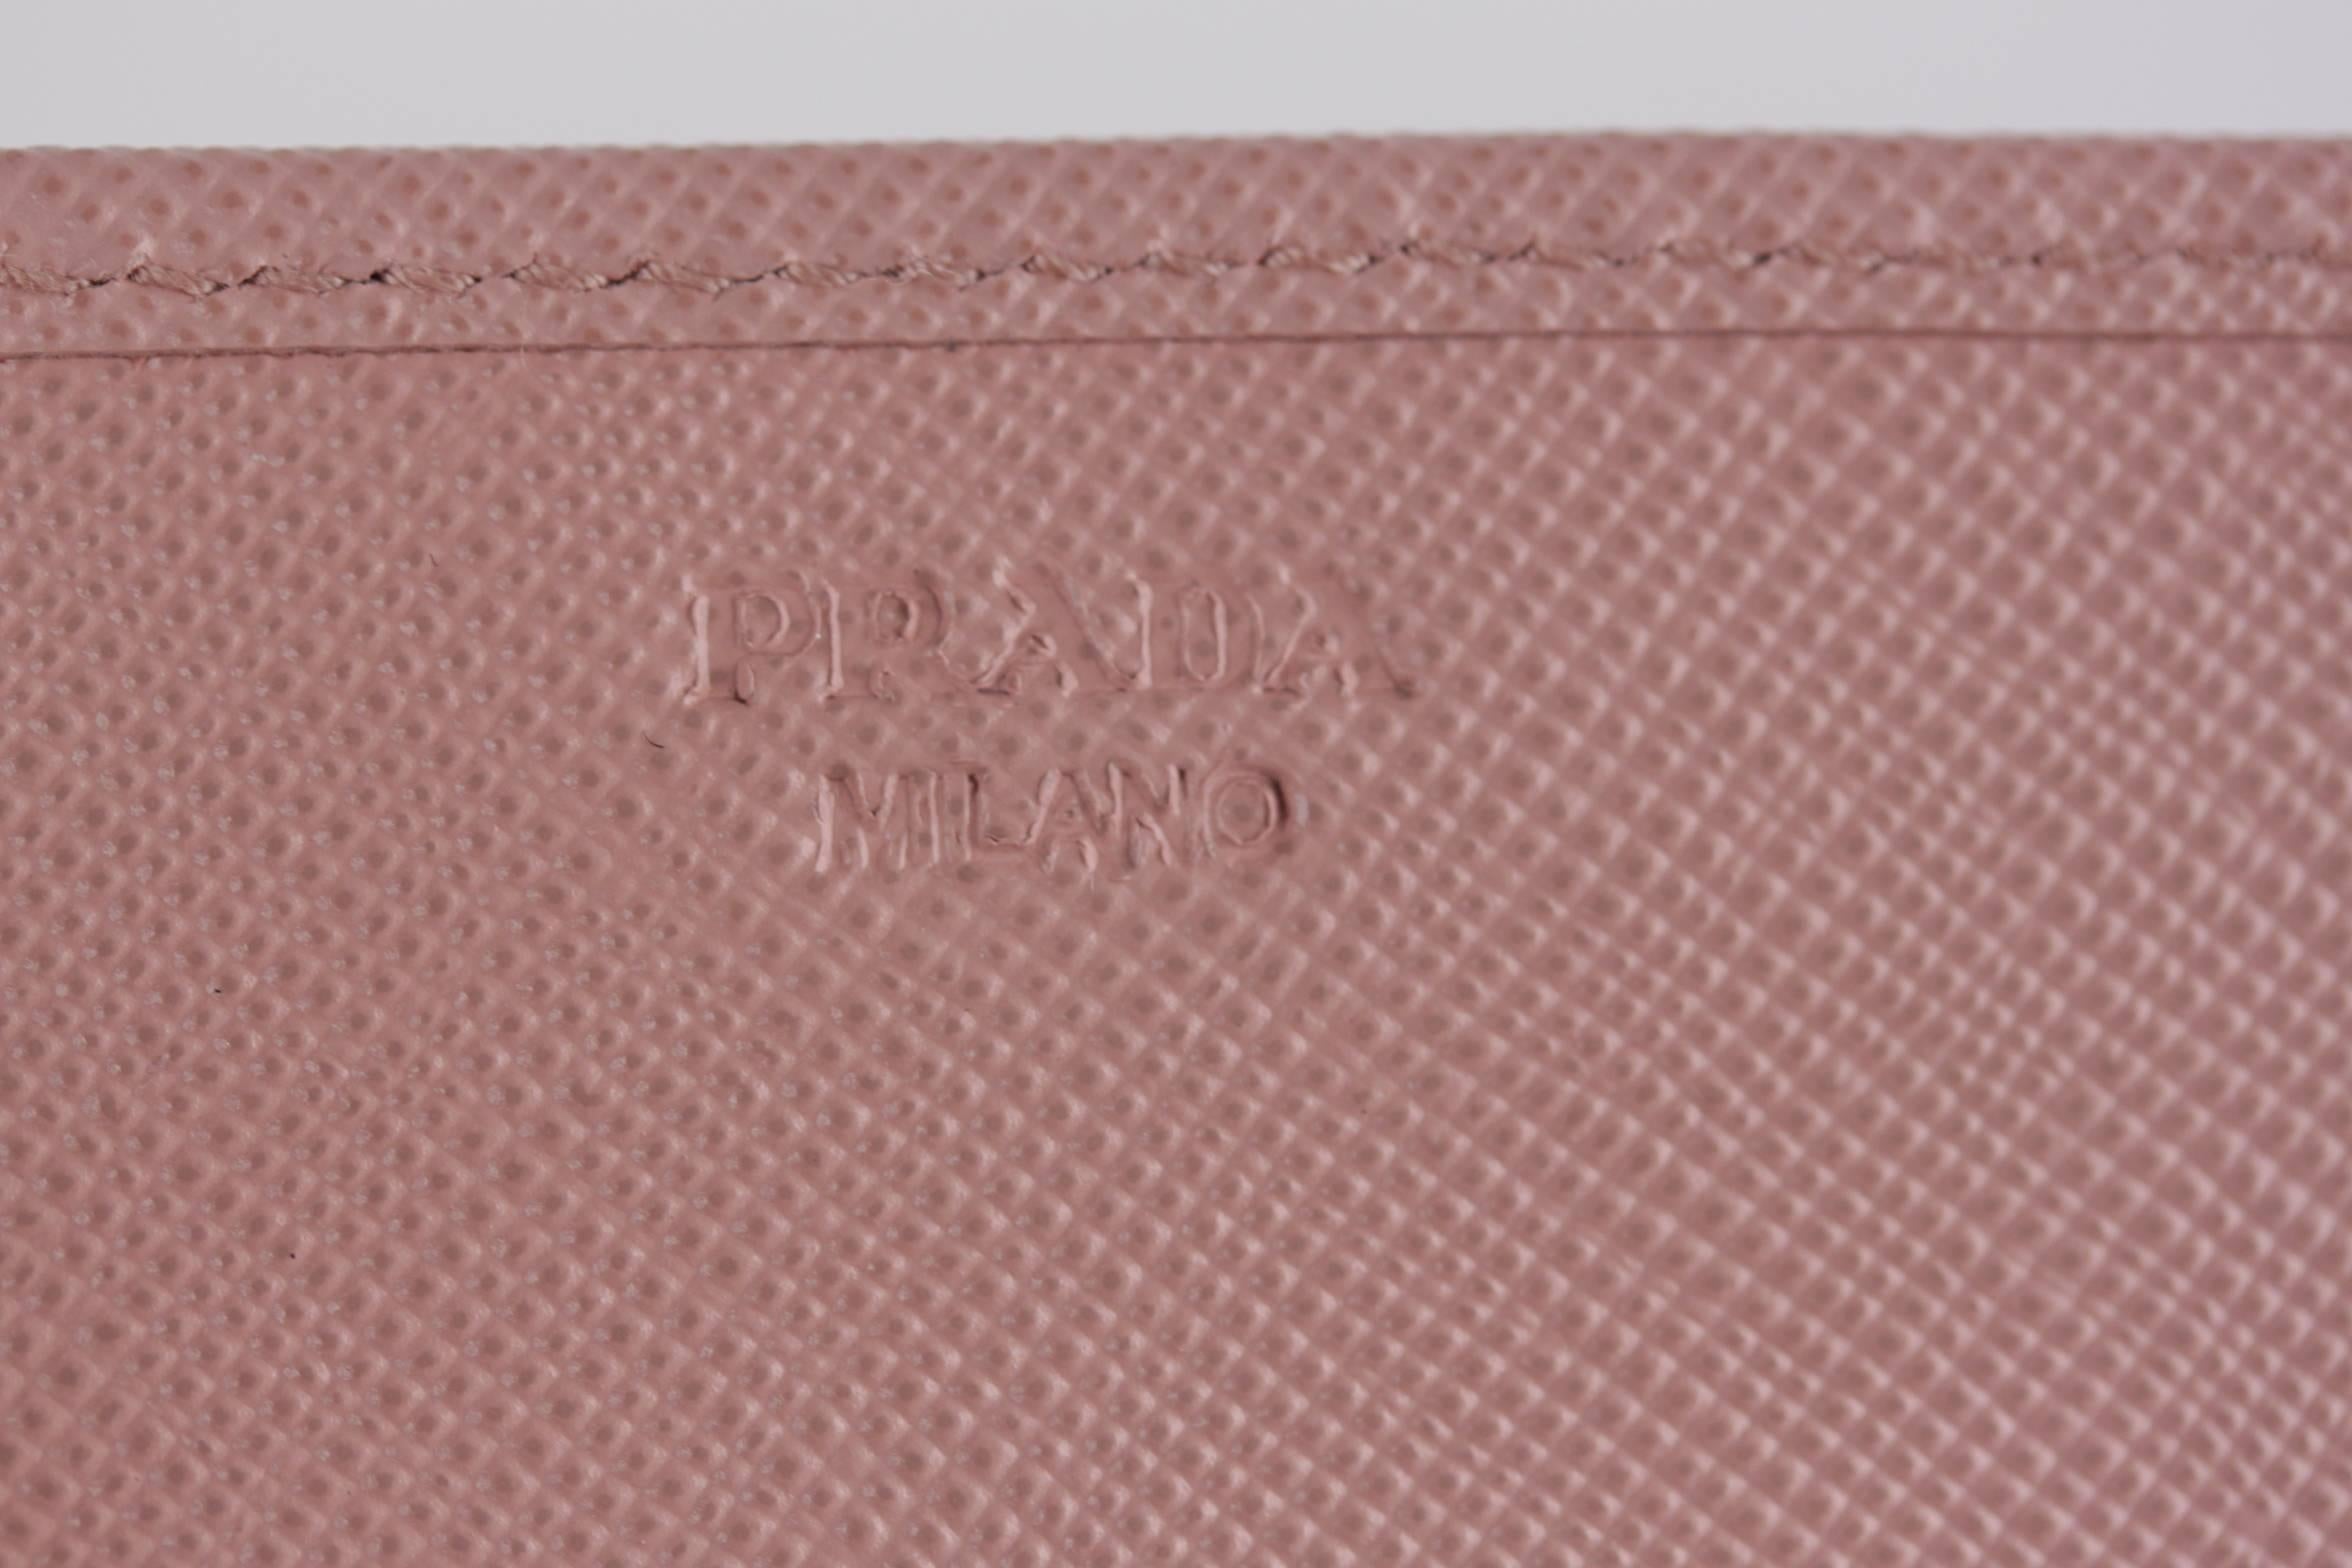 Beige PRADA Pink Leather SAFFIANO FIOCCO Ribbon STRAP WALLET Purse WOC 1M1437 w/BOX